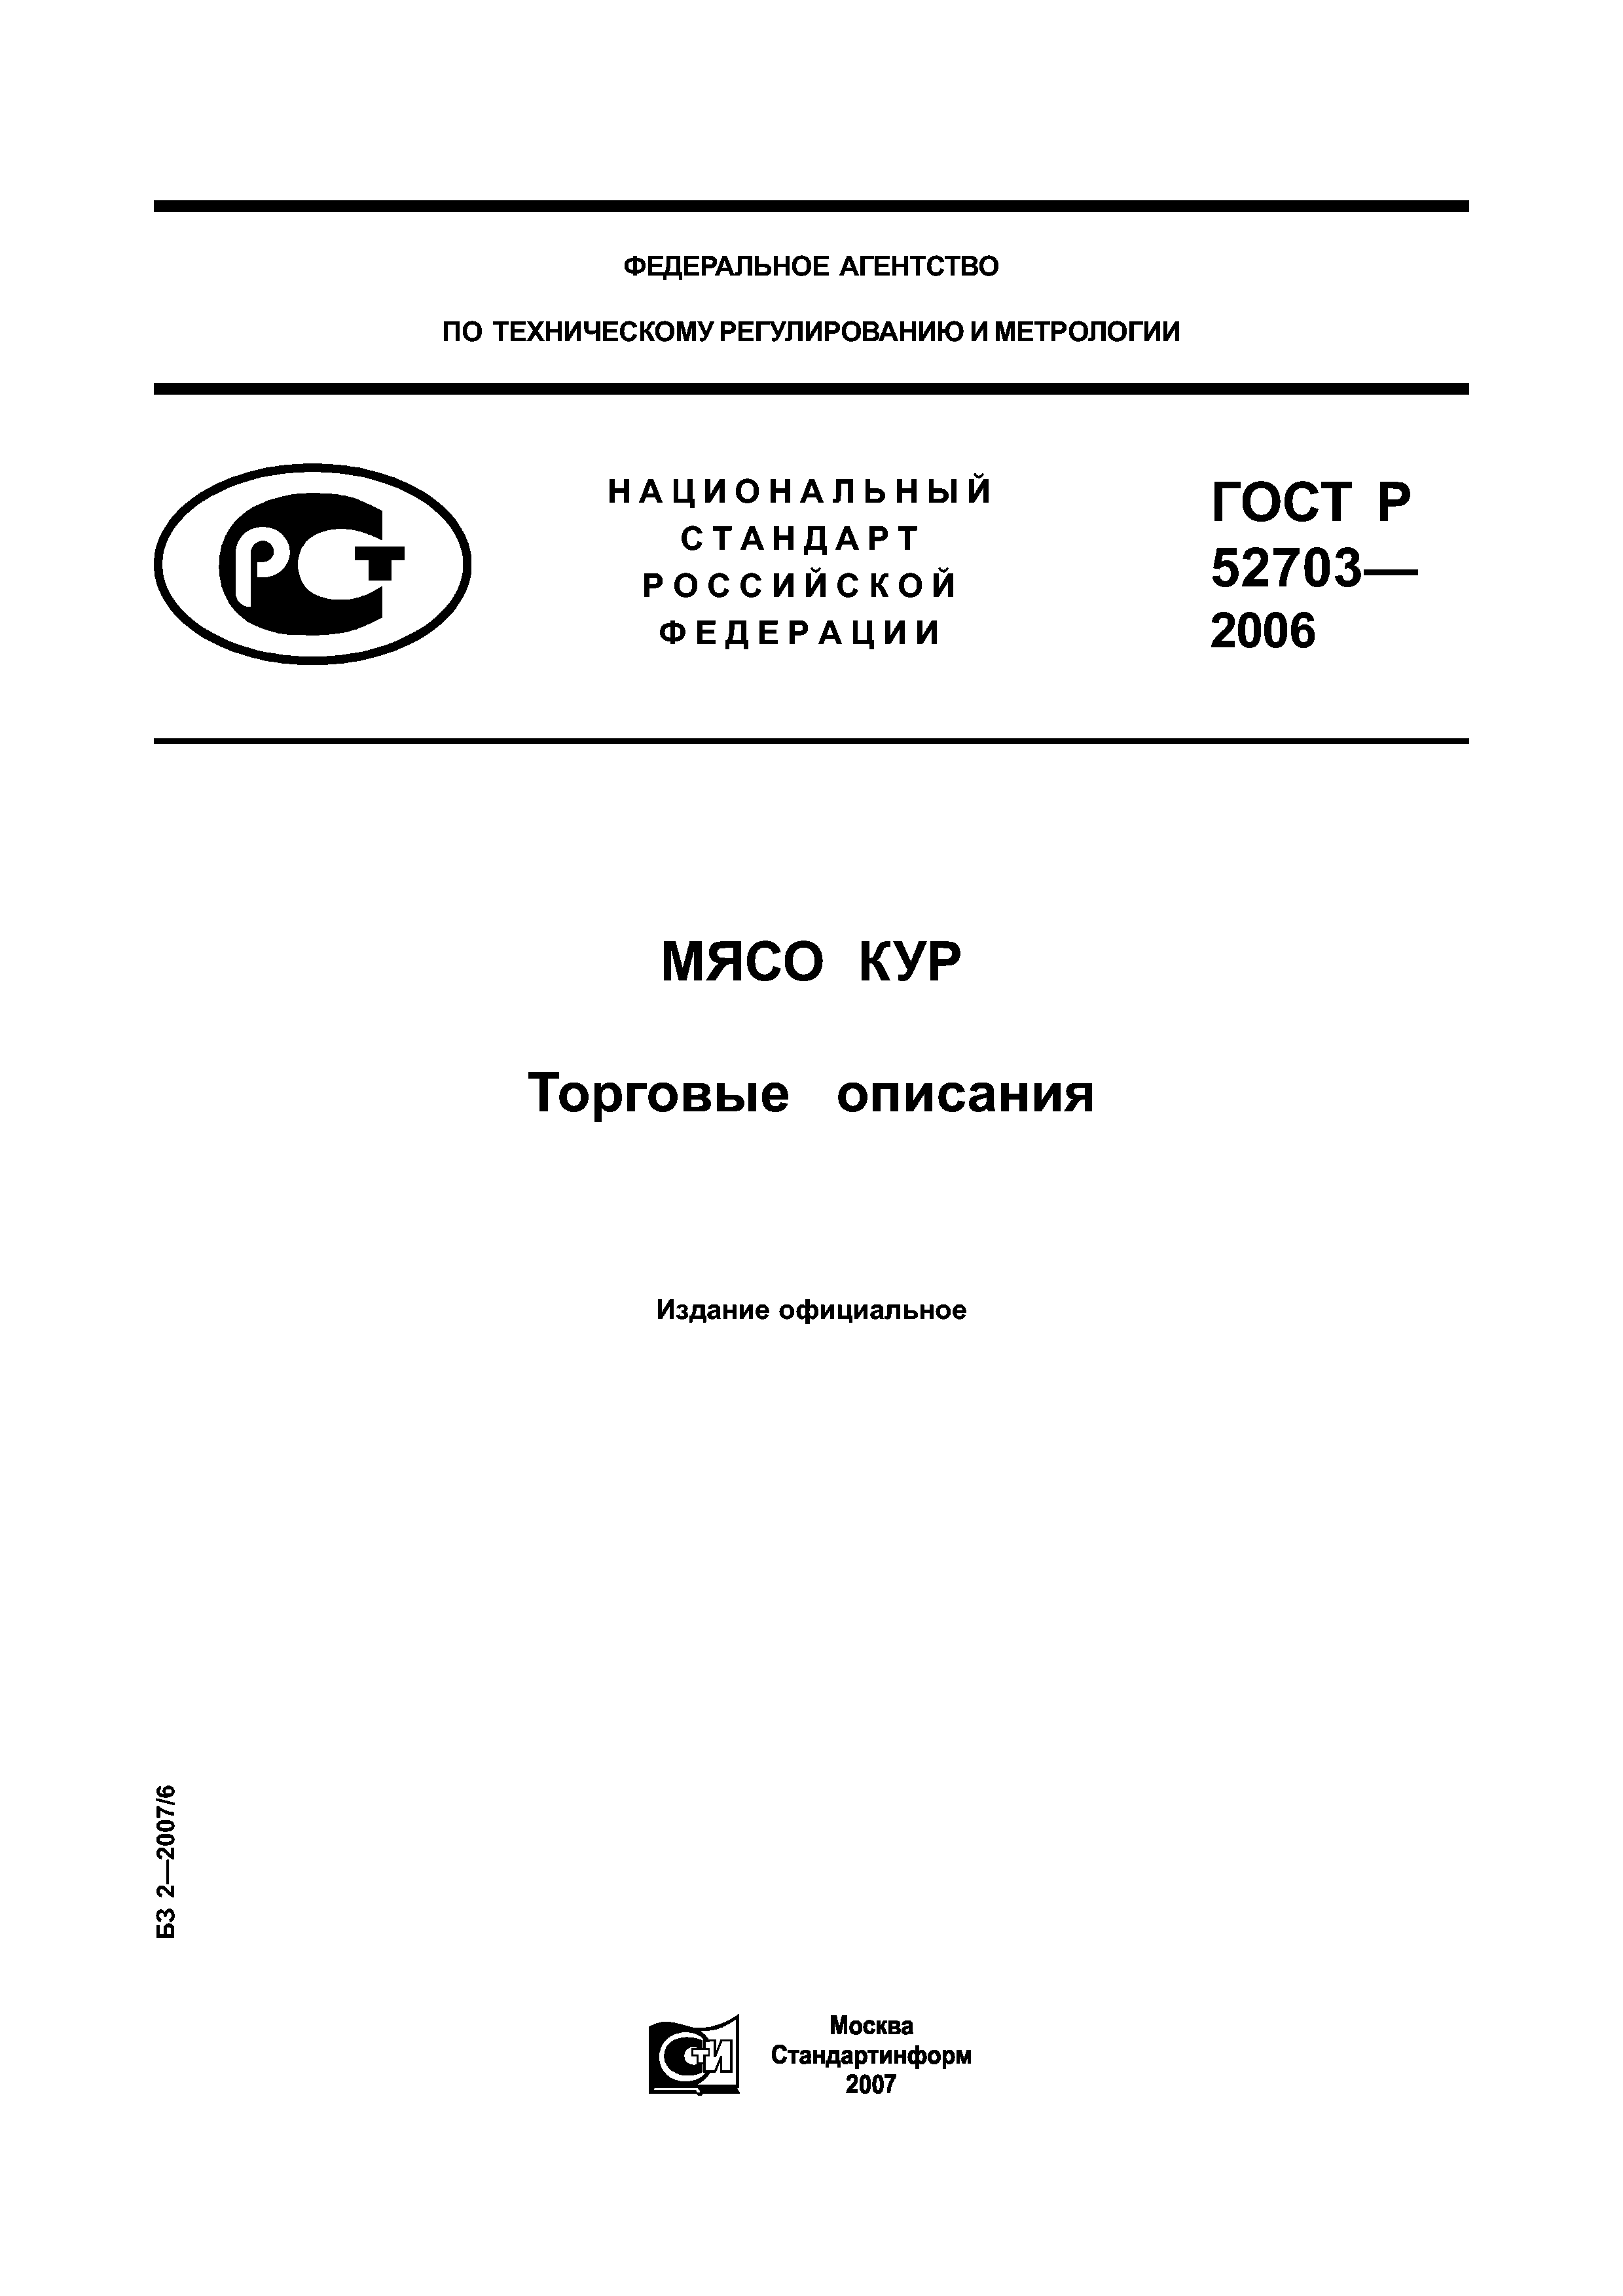 ГОСТ Р 52703-2006